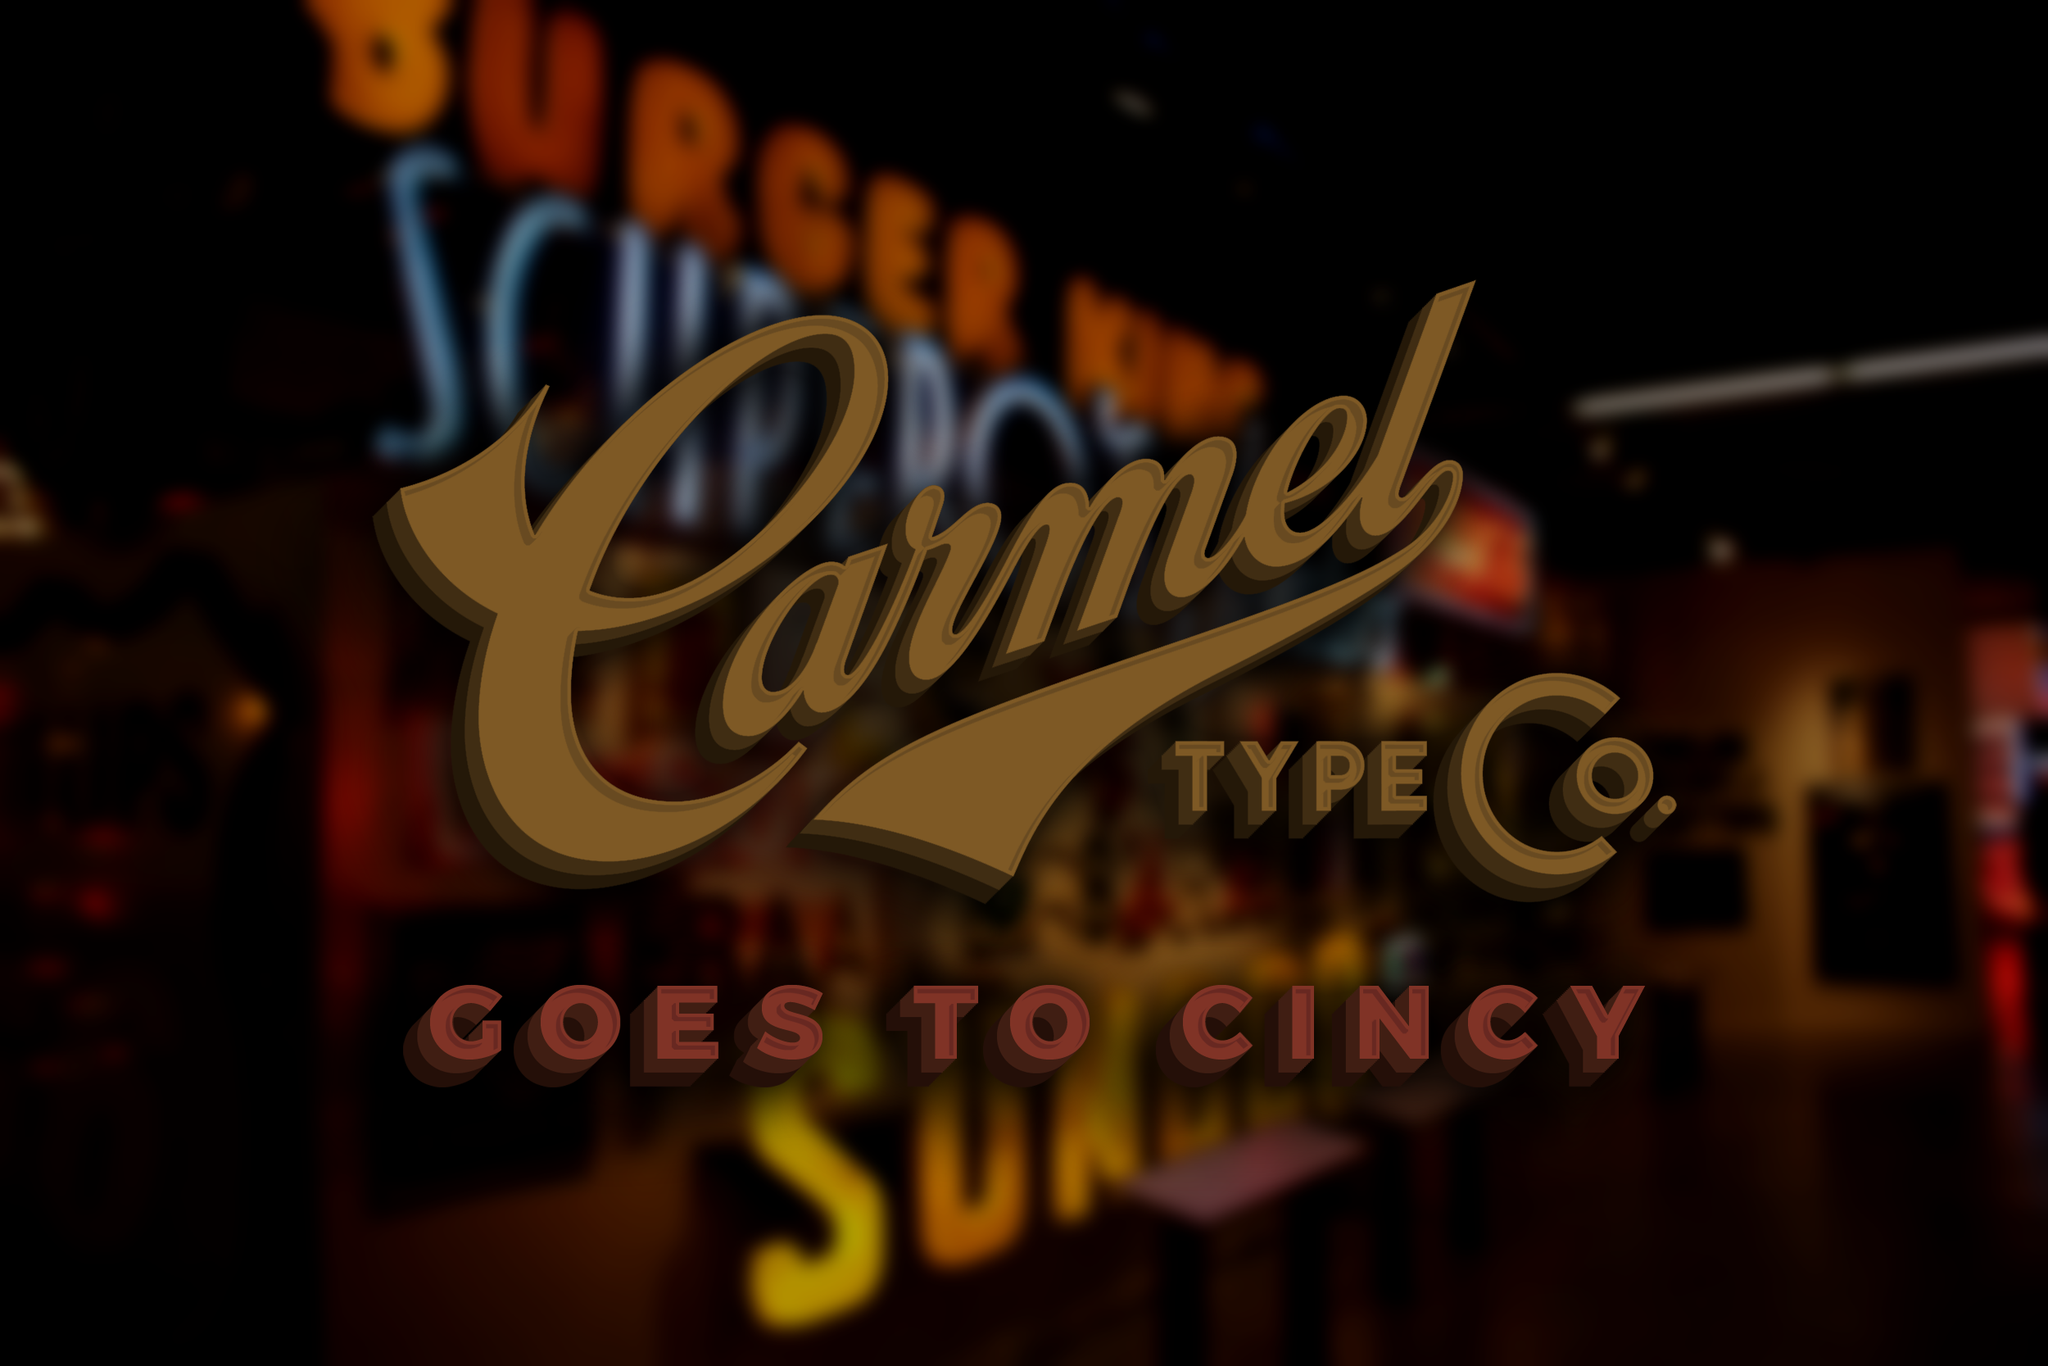 Carmel goes to Cincy